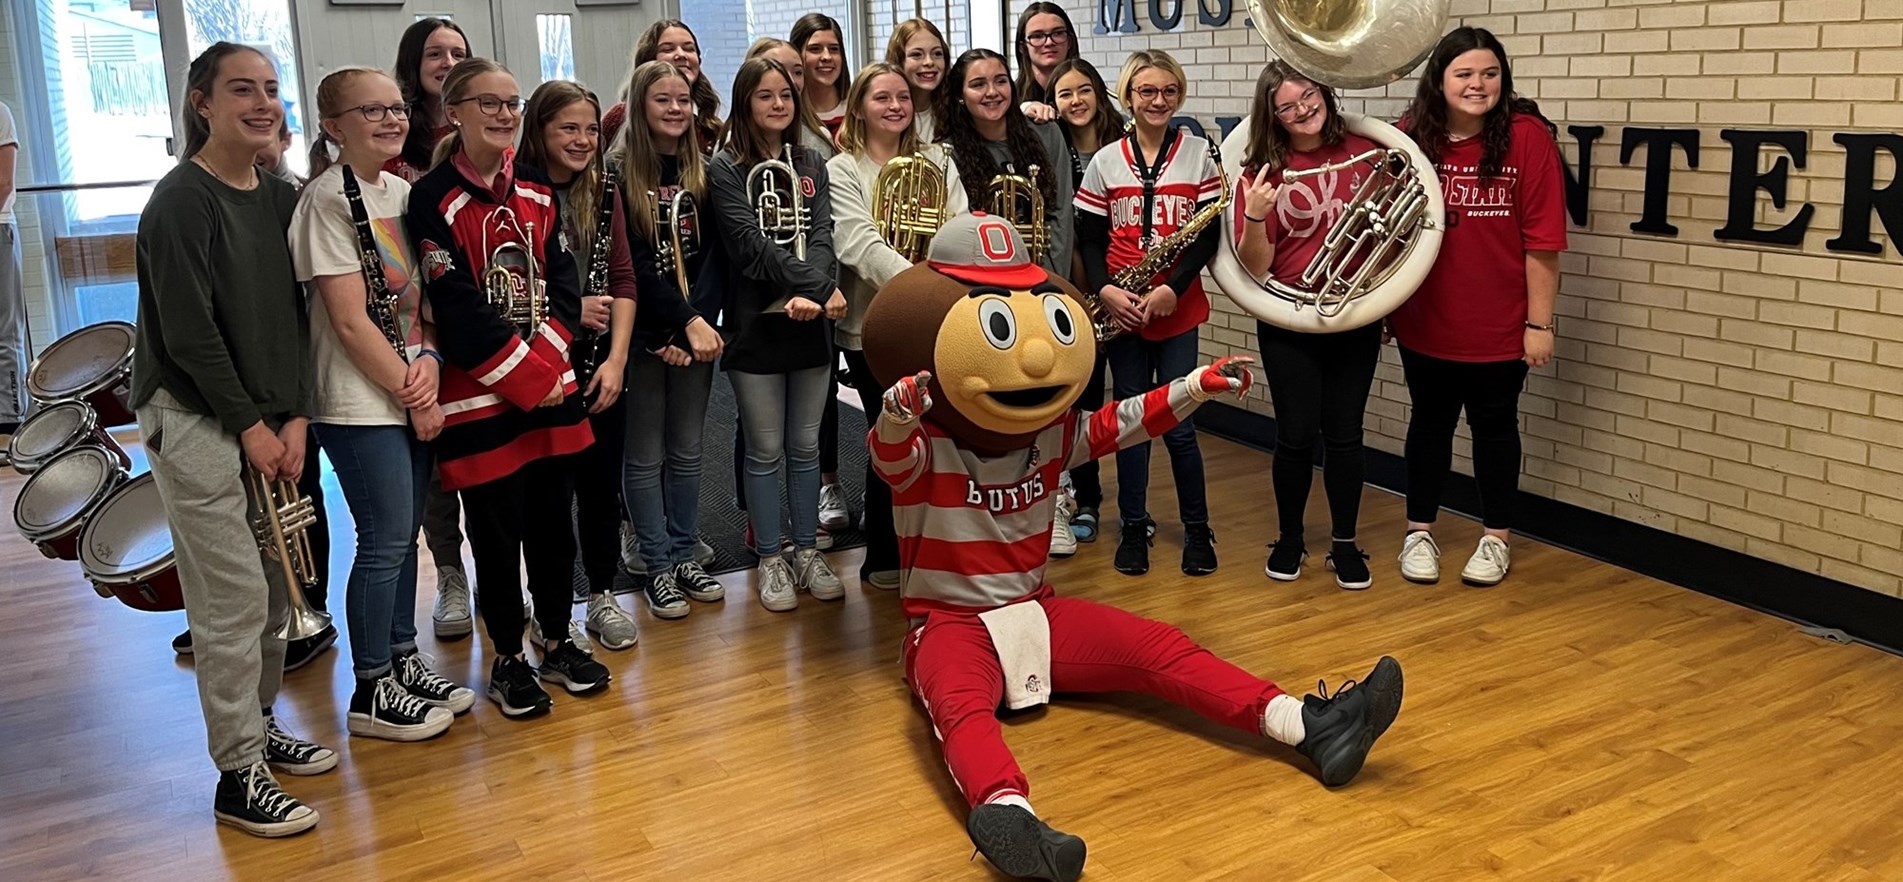 Costumed OSU Mascot Brutus Buckeye seated before Middle School Band members